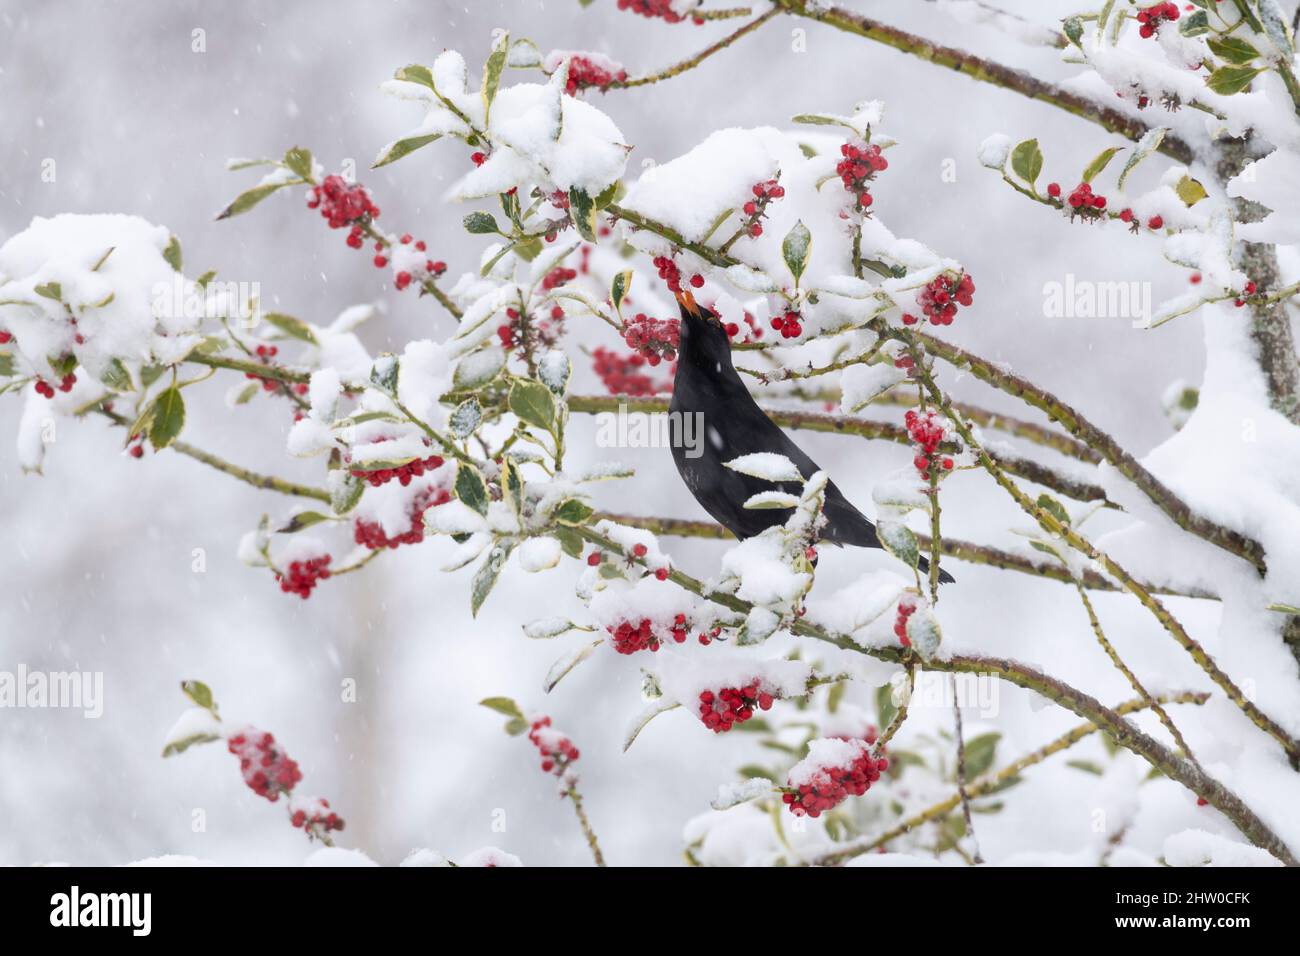 A Male Blackbird (Turdus Merula) Feeding on the Berries of a Holly Bush (Ilex Aquifolium) in Winter Stock Photo